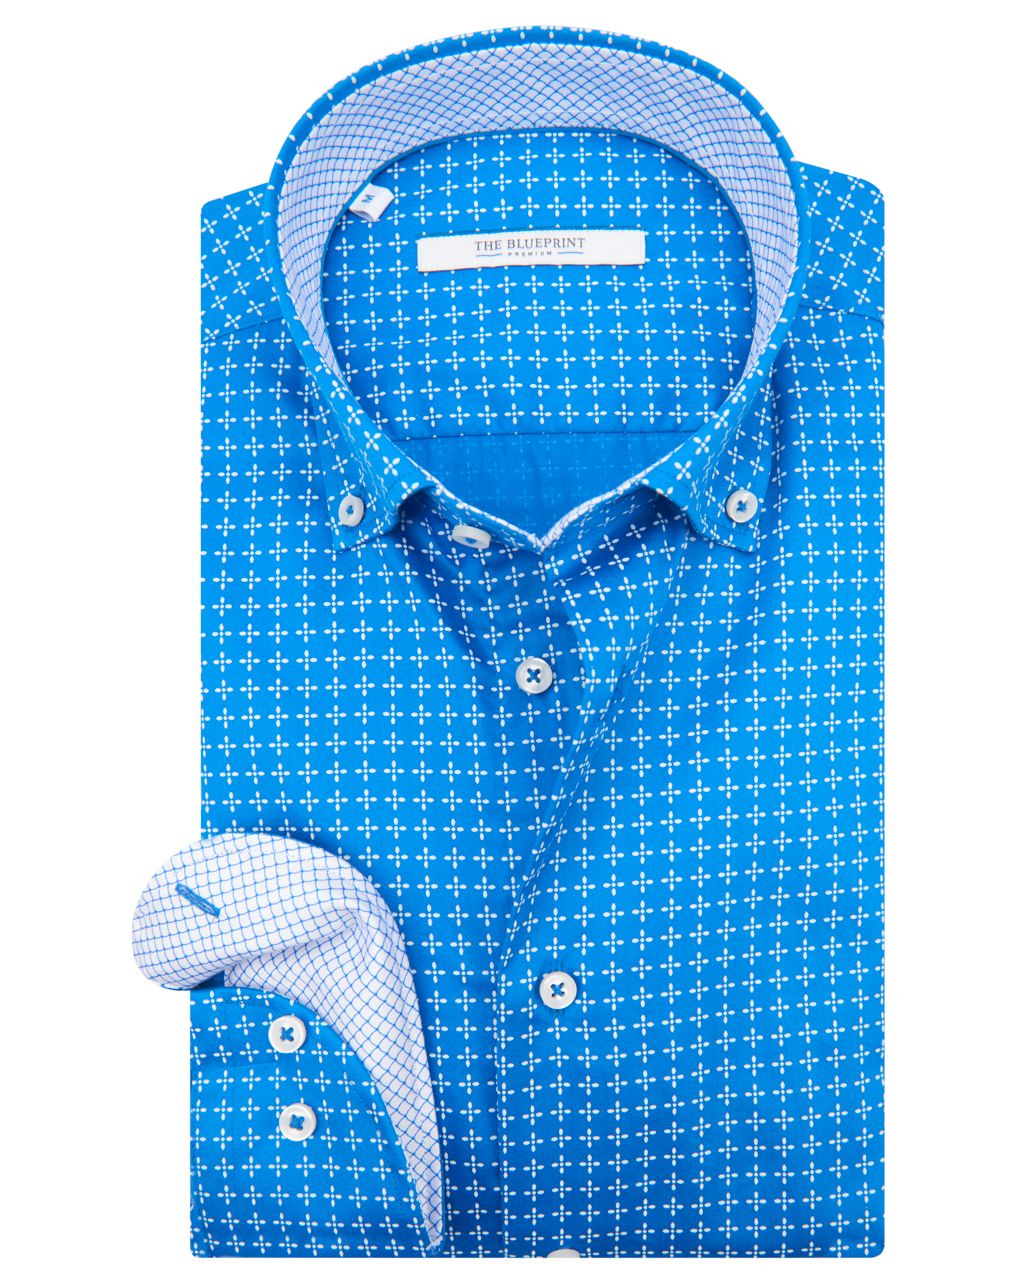 The BLUEPRINT Premium Trendy overhemd LM Kobalt dessin 070257-001-L